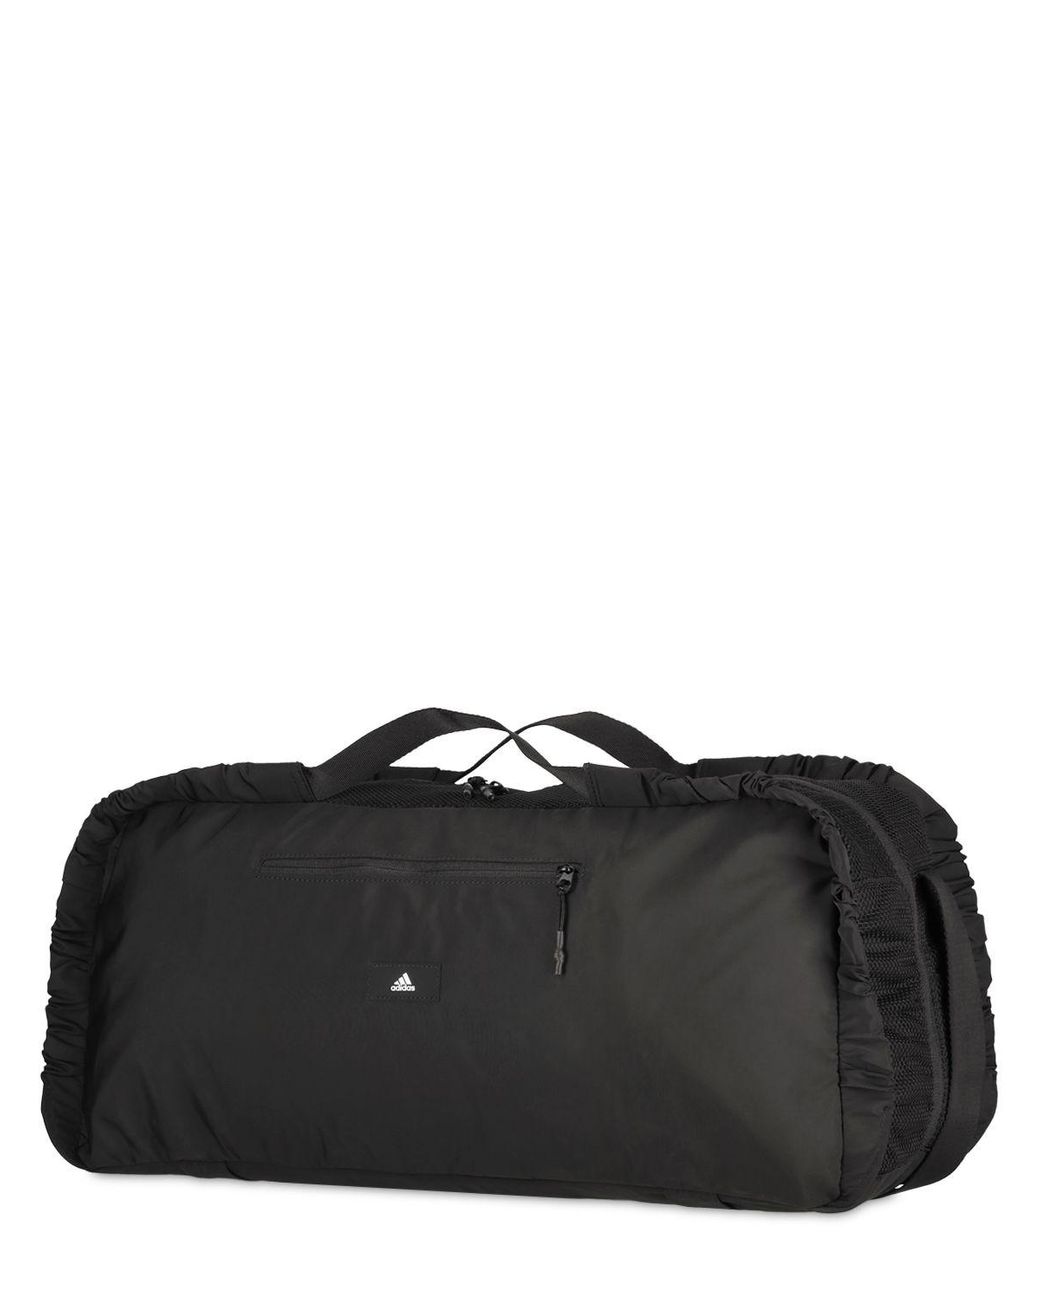 adidas Originals Yoga Studio Earth Duffle Bag in Black | Lyst